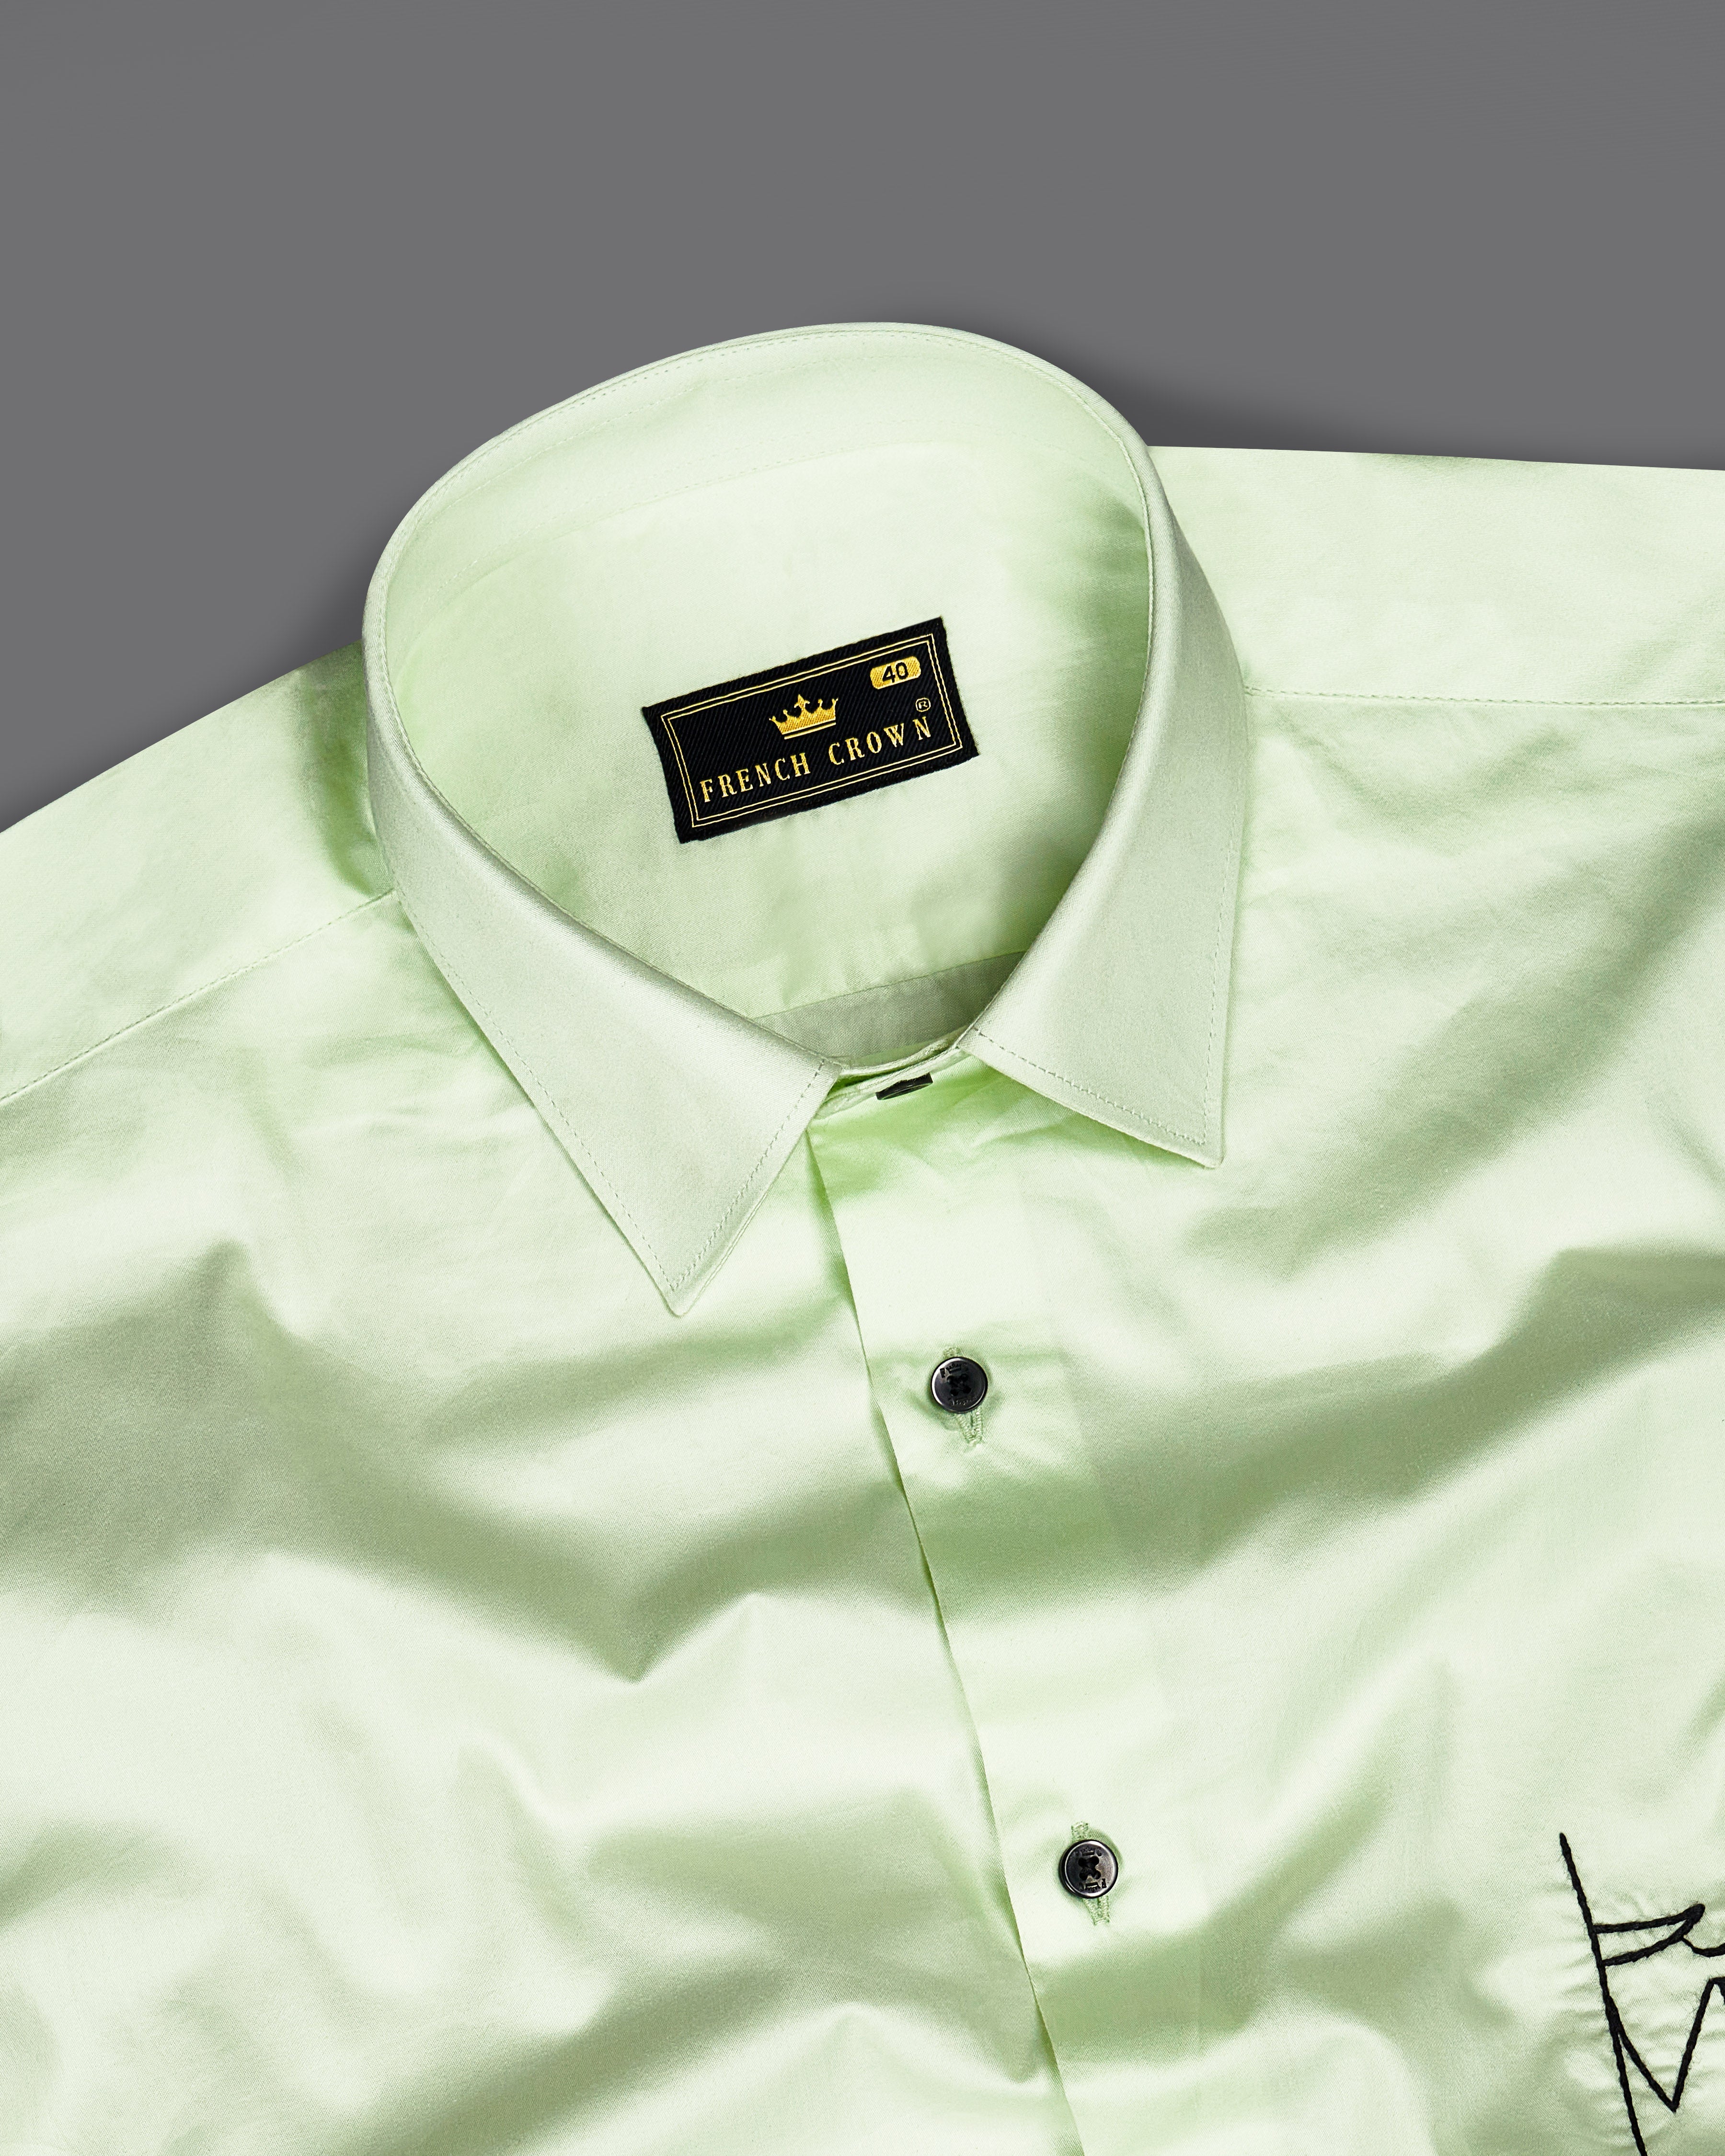 Periglacial Green with Black Subtle Sheen Embroidered Super Soft Premium Cotton Shirt 9021-BLK-E34-38, 9021-BLK-E34-H-38, 9021-BLK-E34-39, 9021-BLK-E34-H-39, 9021-BLK-E34-40, 9021-BLK-E34-H-40, 9021-BLK-E34-42, 9021-BLK-E34-H-42, 9021-BLK-E34-44, 9021-BLK-E34-H-44, 9021-BLK-E34-46, 9021-BLK-E34-H-46, 9021-BLK-E34-48, 9021-BLK-E34-H-48, 9021-BLK-E34-50, 9021-BLK-E34-H-50, 9021-BLK-E34-52, 9021-BLK-E34-H-52